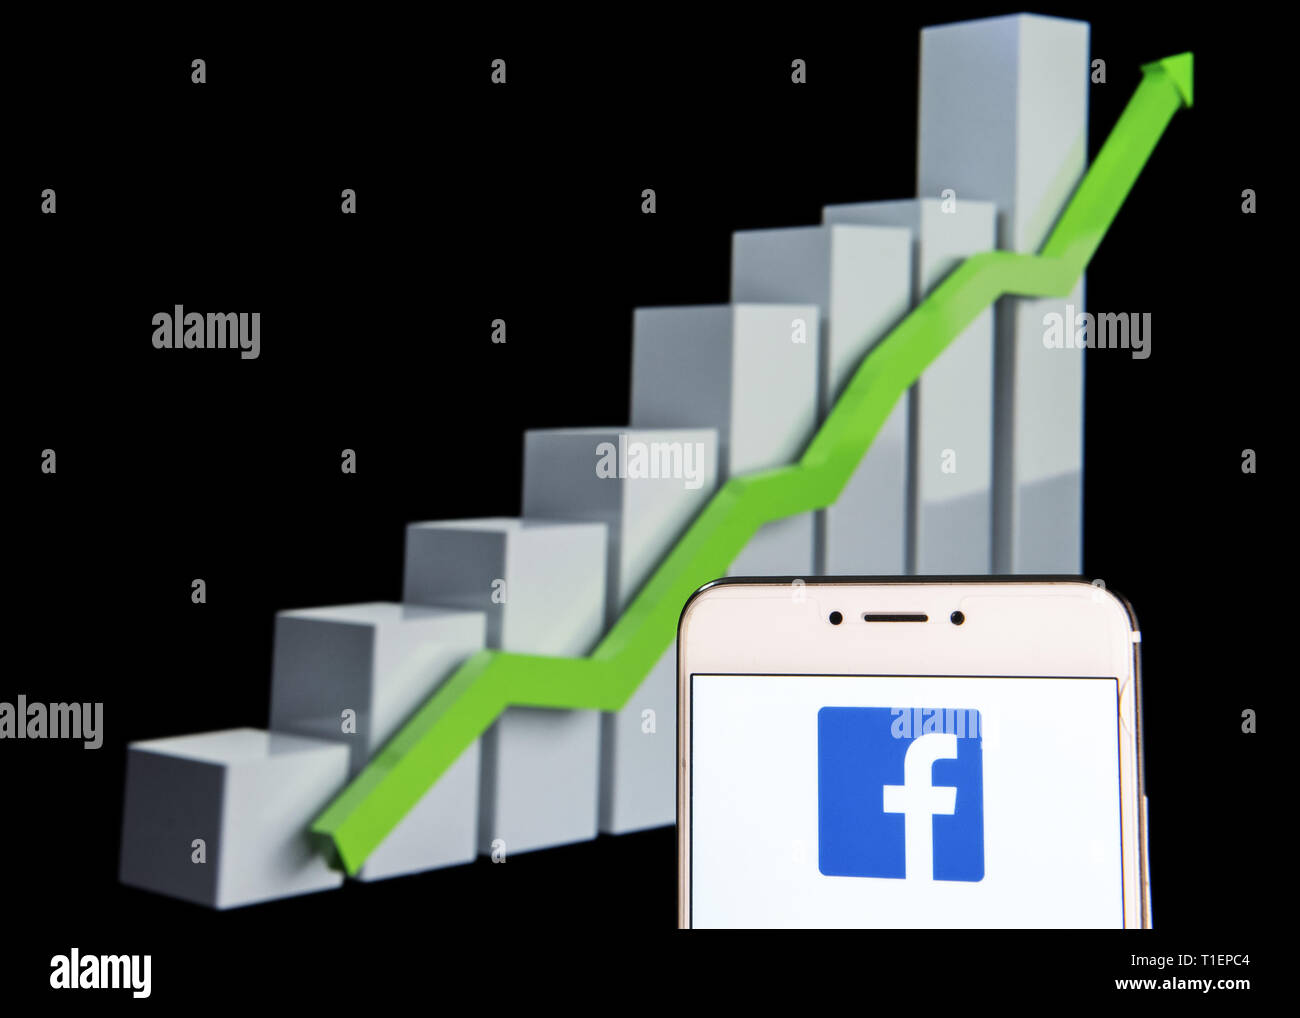 Facebook Stock Live Chart